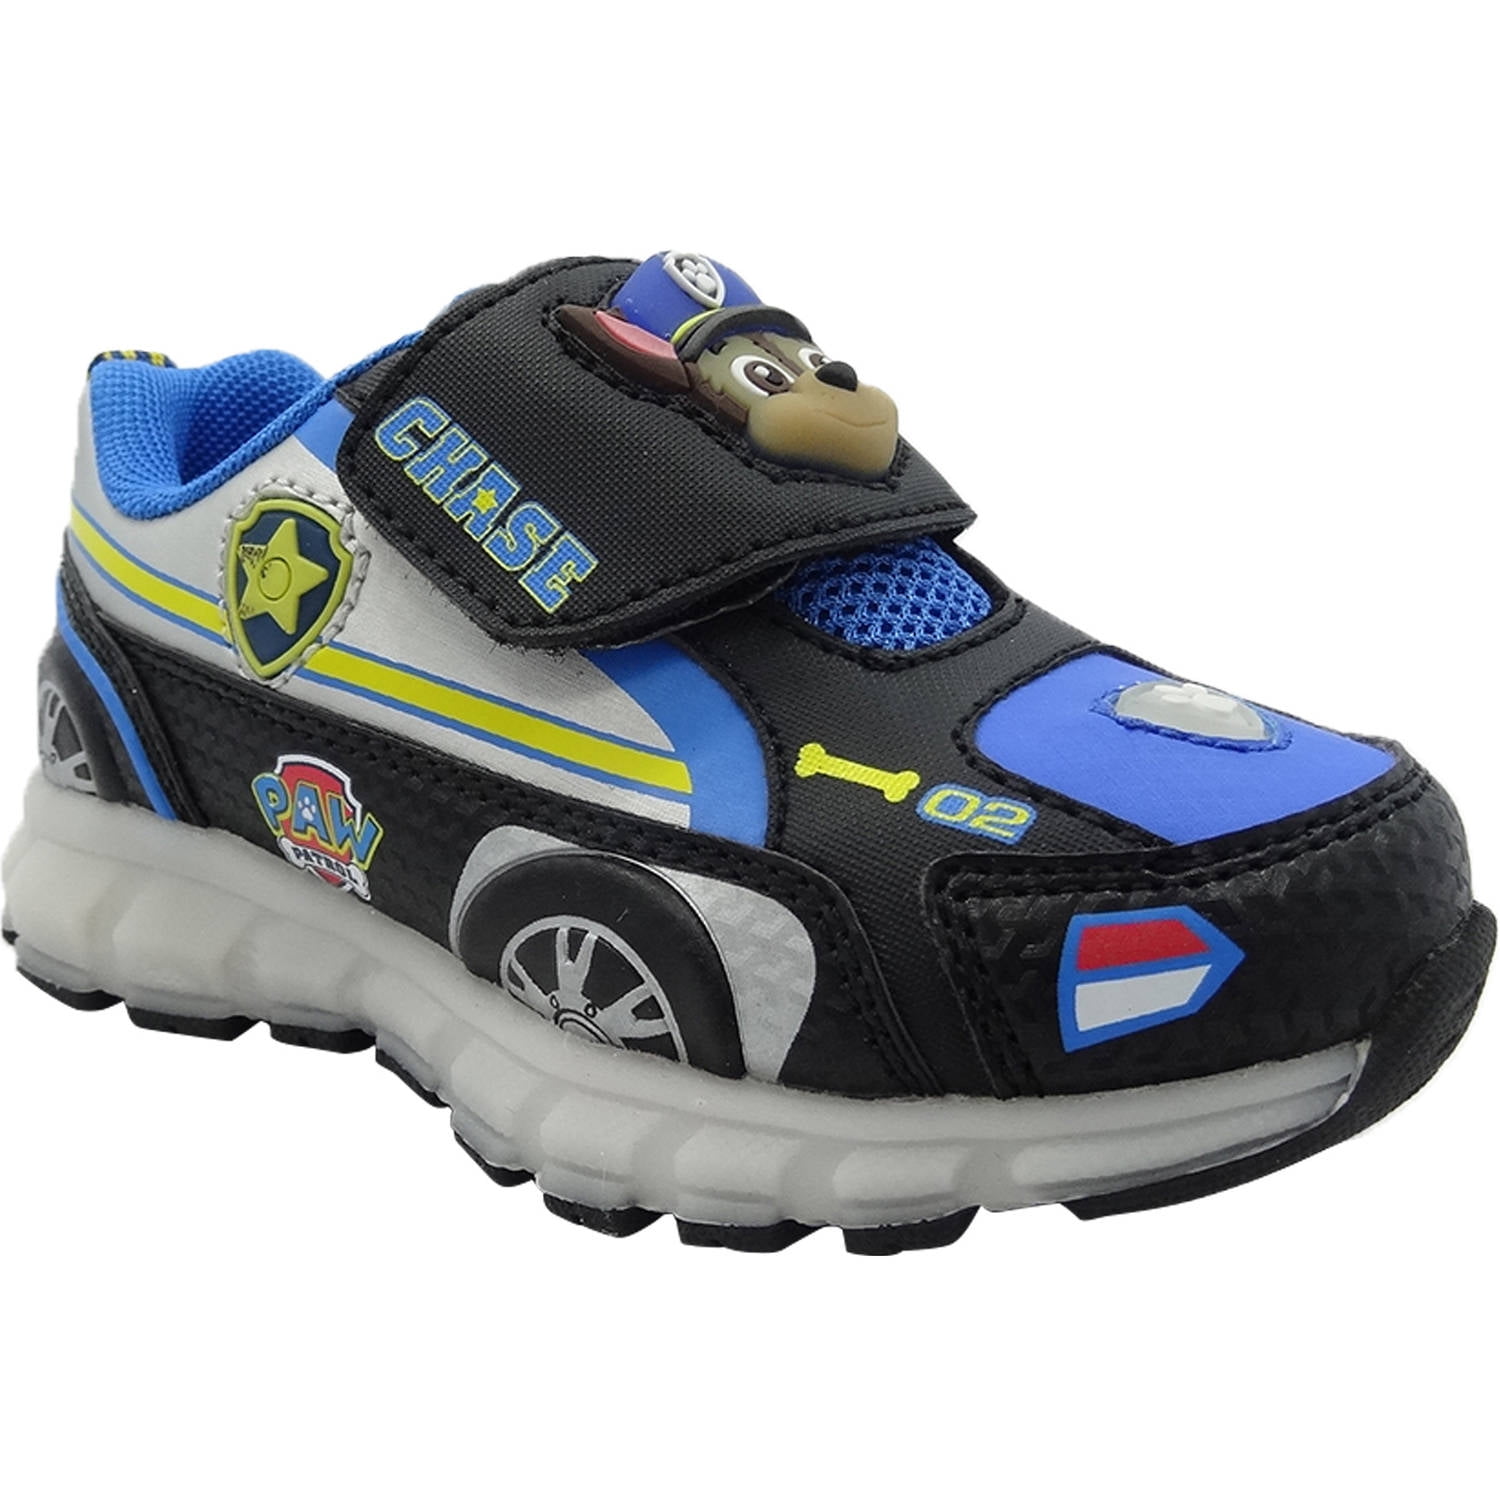 Paw Patrol Toddler Boys' Athletic Shoe 